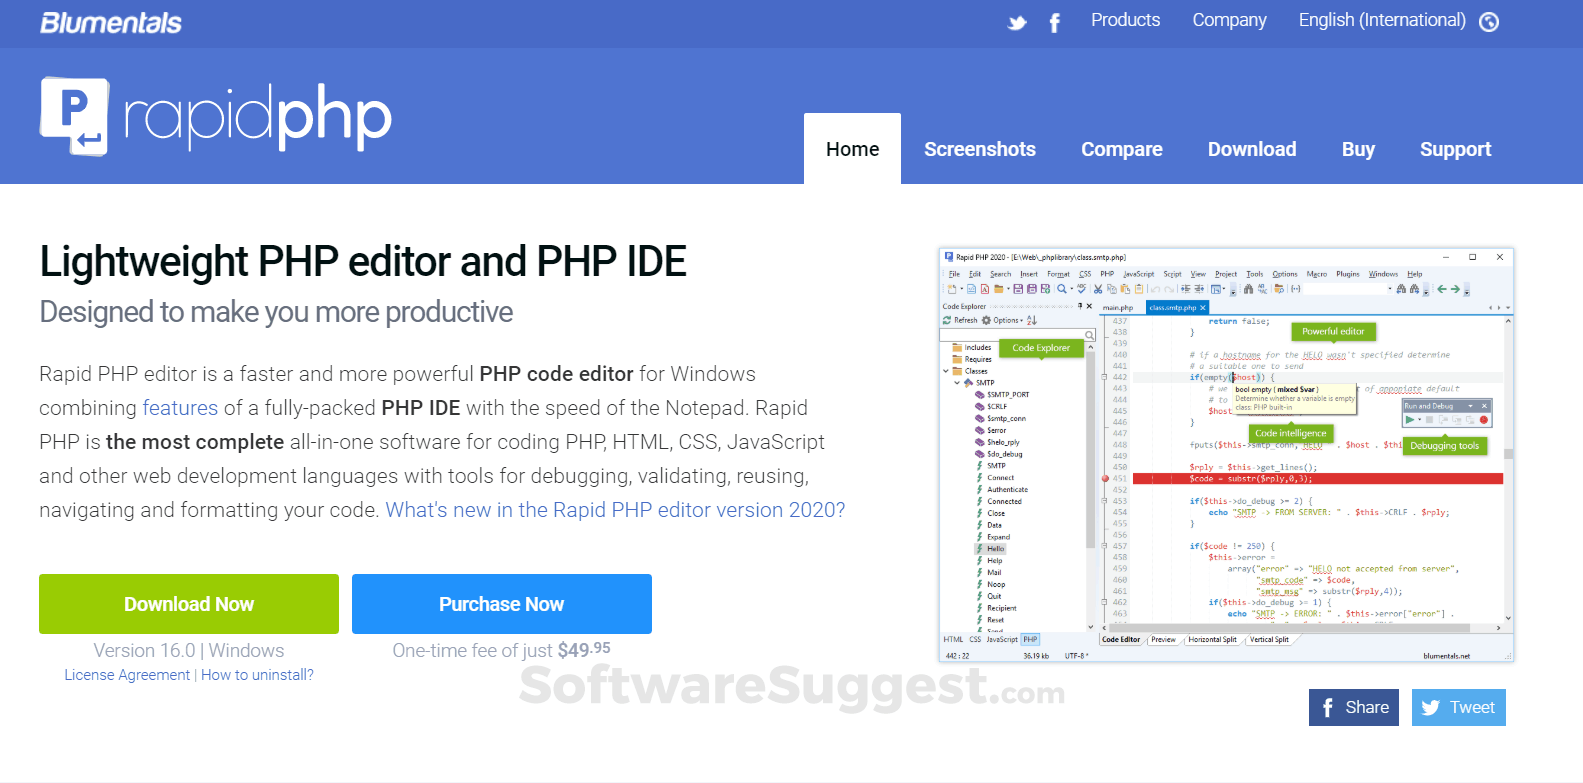 php rapid application development